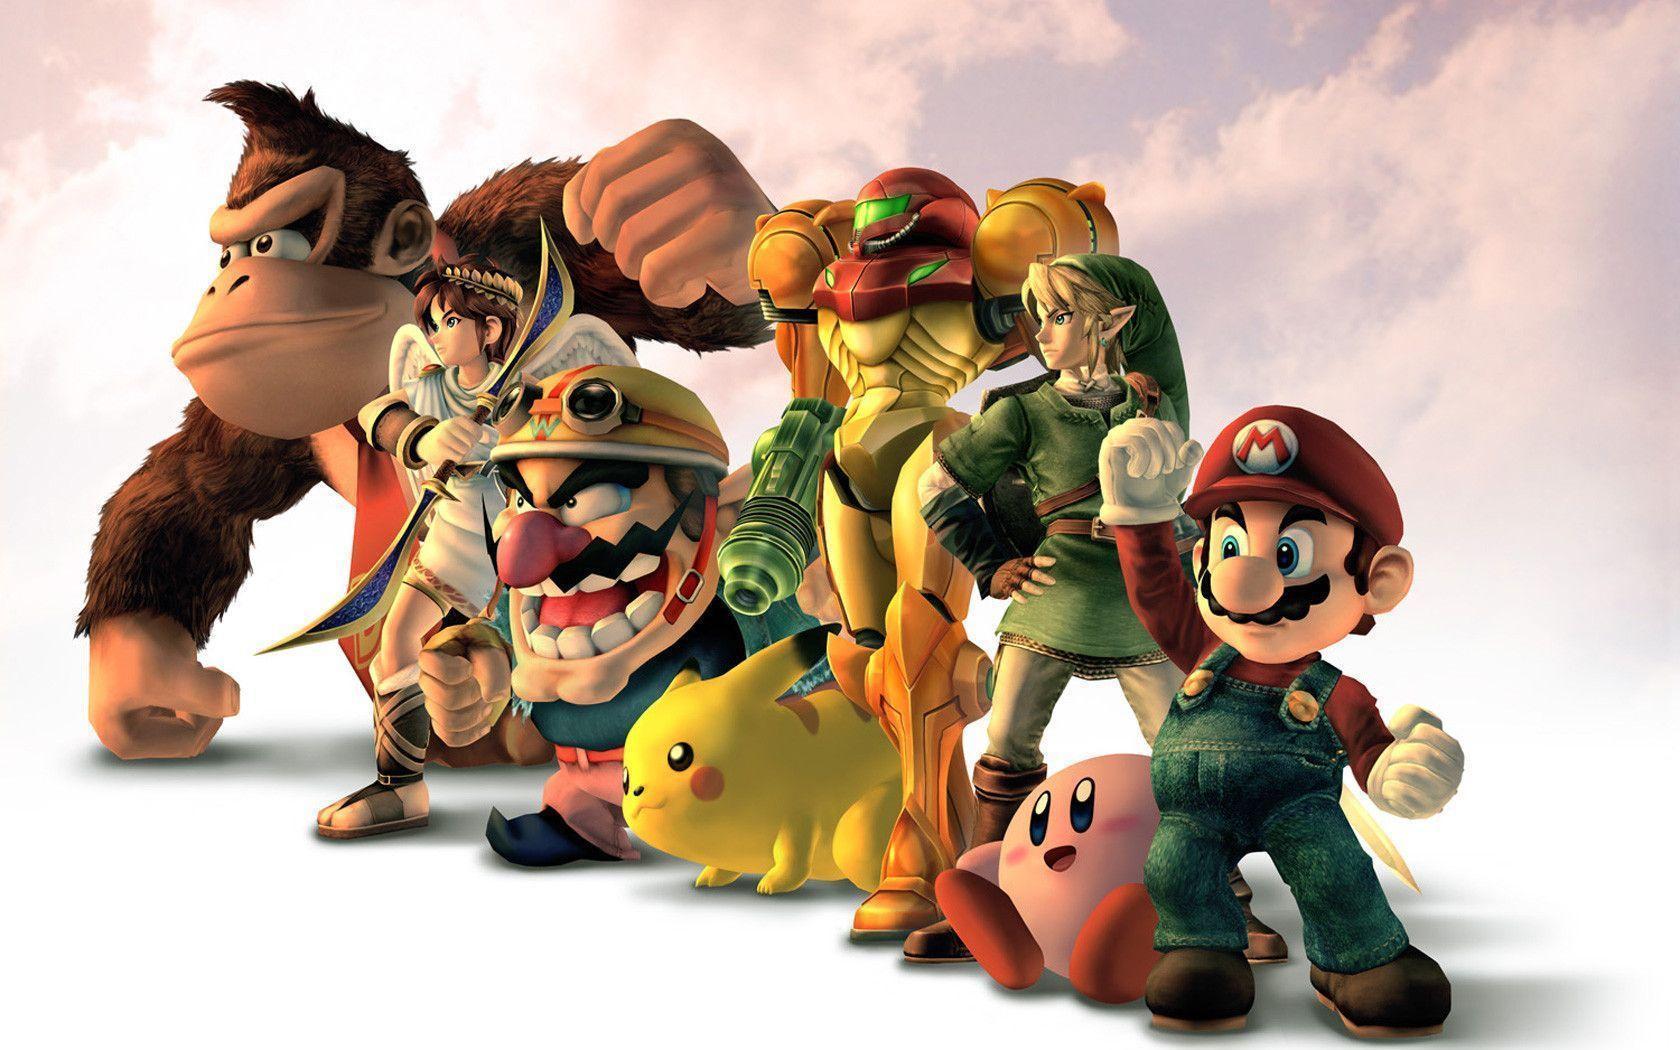 Super Smash Bros. Brawl Wallpaper. Super Smash Bros. Brawl